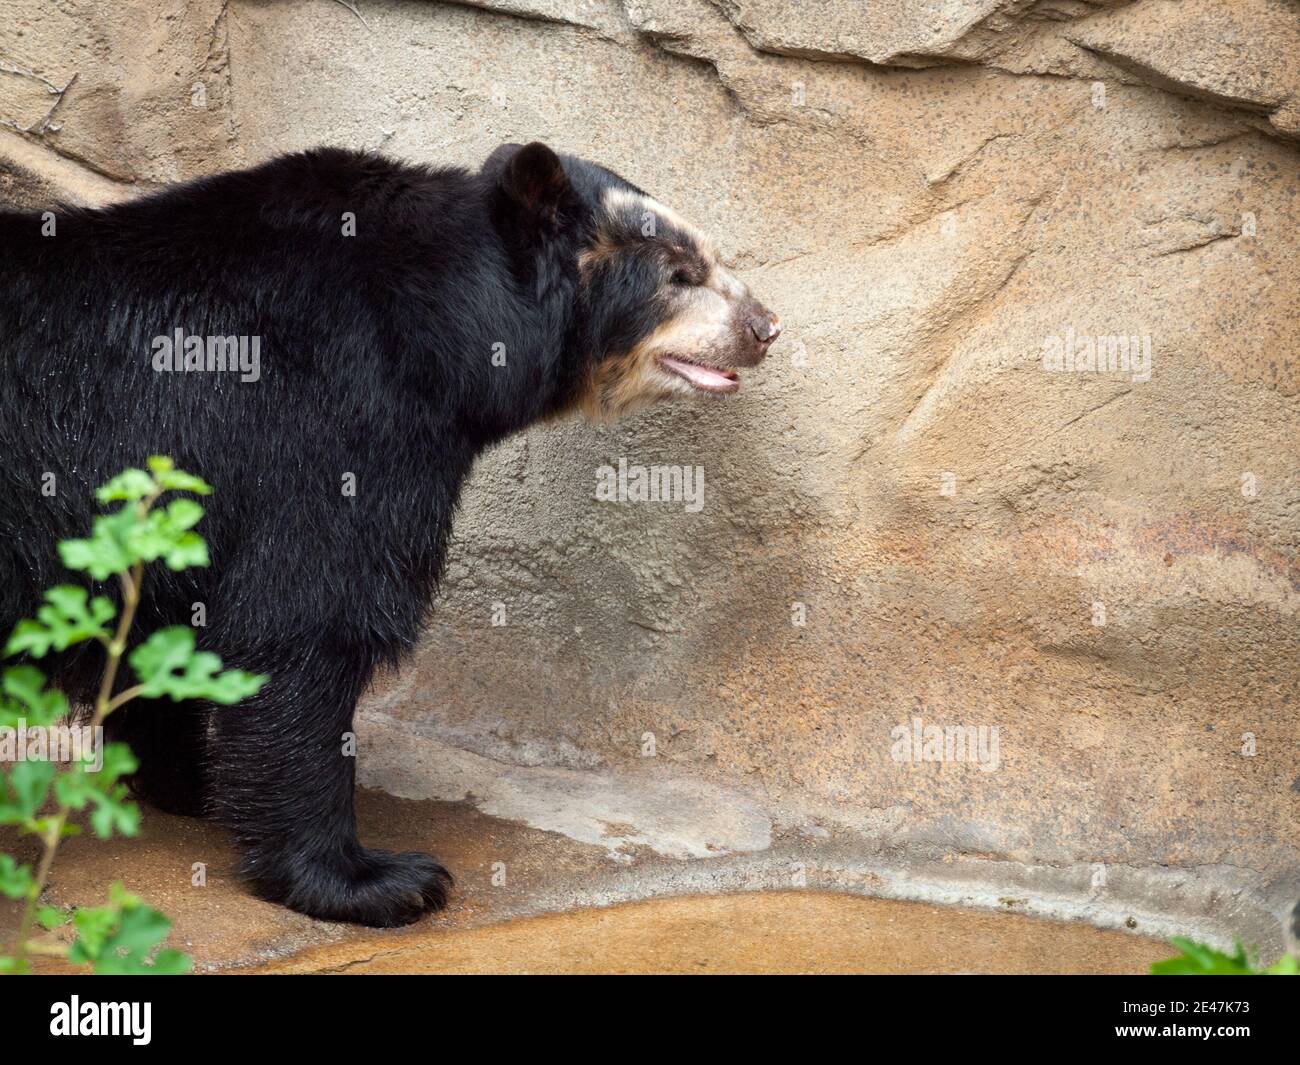 Un oso de anteojos (Tremarctos ornatus), también conocido como oso andino, o oso andino de cara corta, en cautiverio en el Lincoln Park Zoo de Chicago. Foto de stock